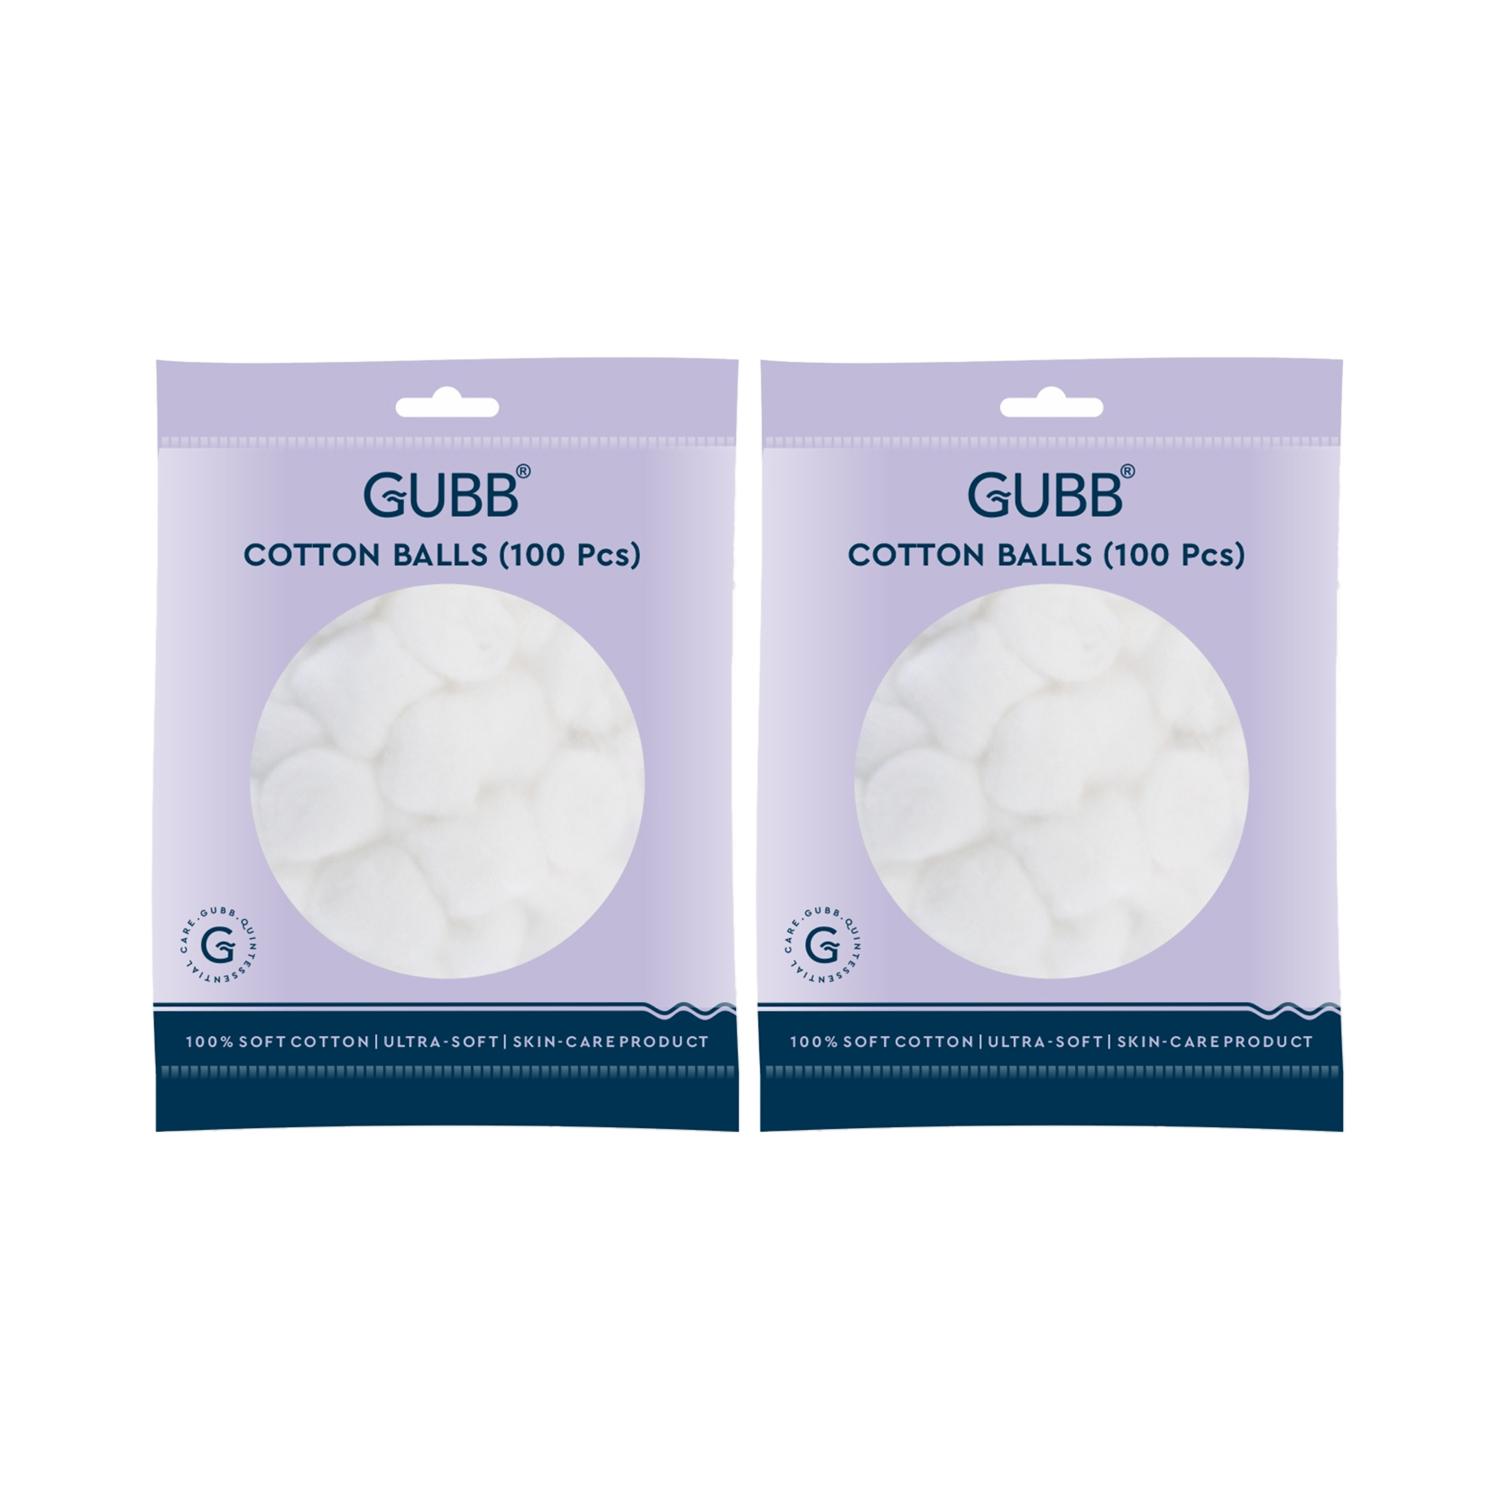 GUBB | GUBB Cotton Balls New 100S Pack Of 2 Combo